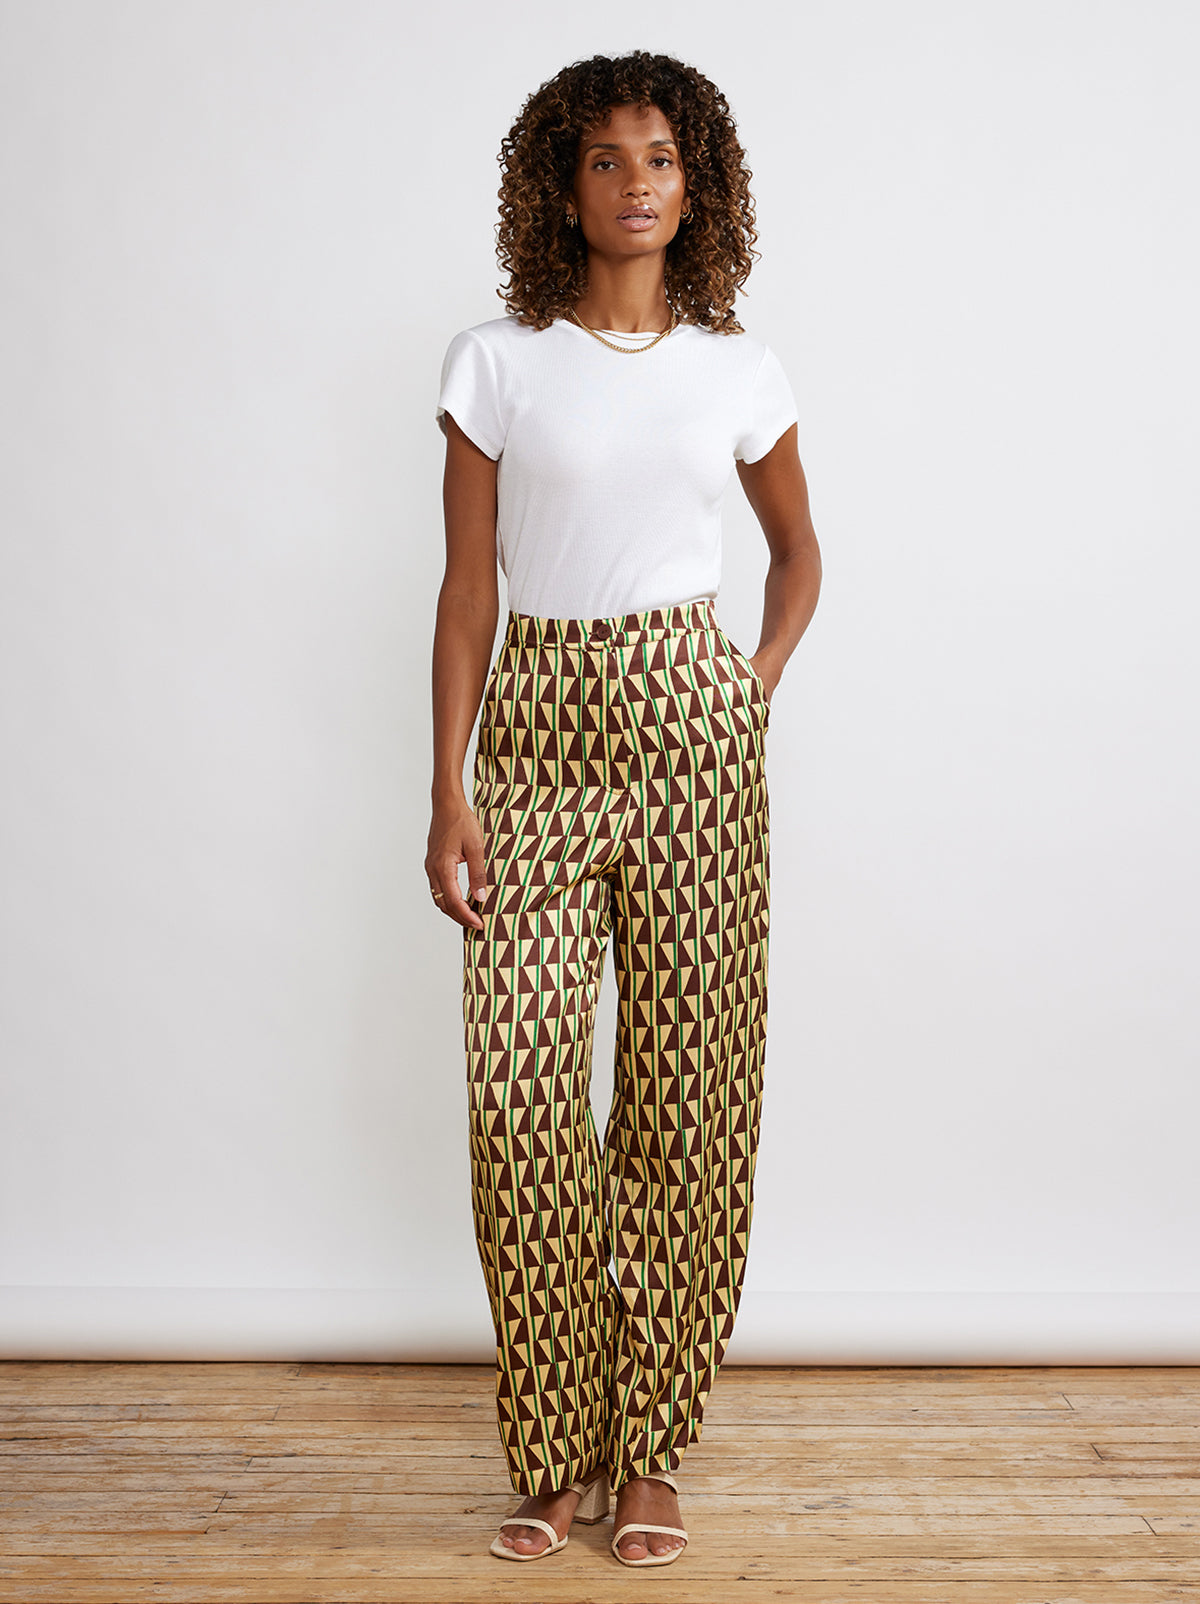 Ribbed trousers - Beige/Leopard print - Ladies | H&M IN